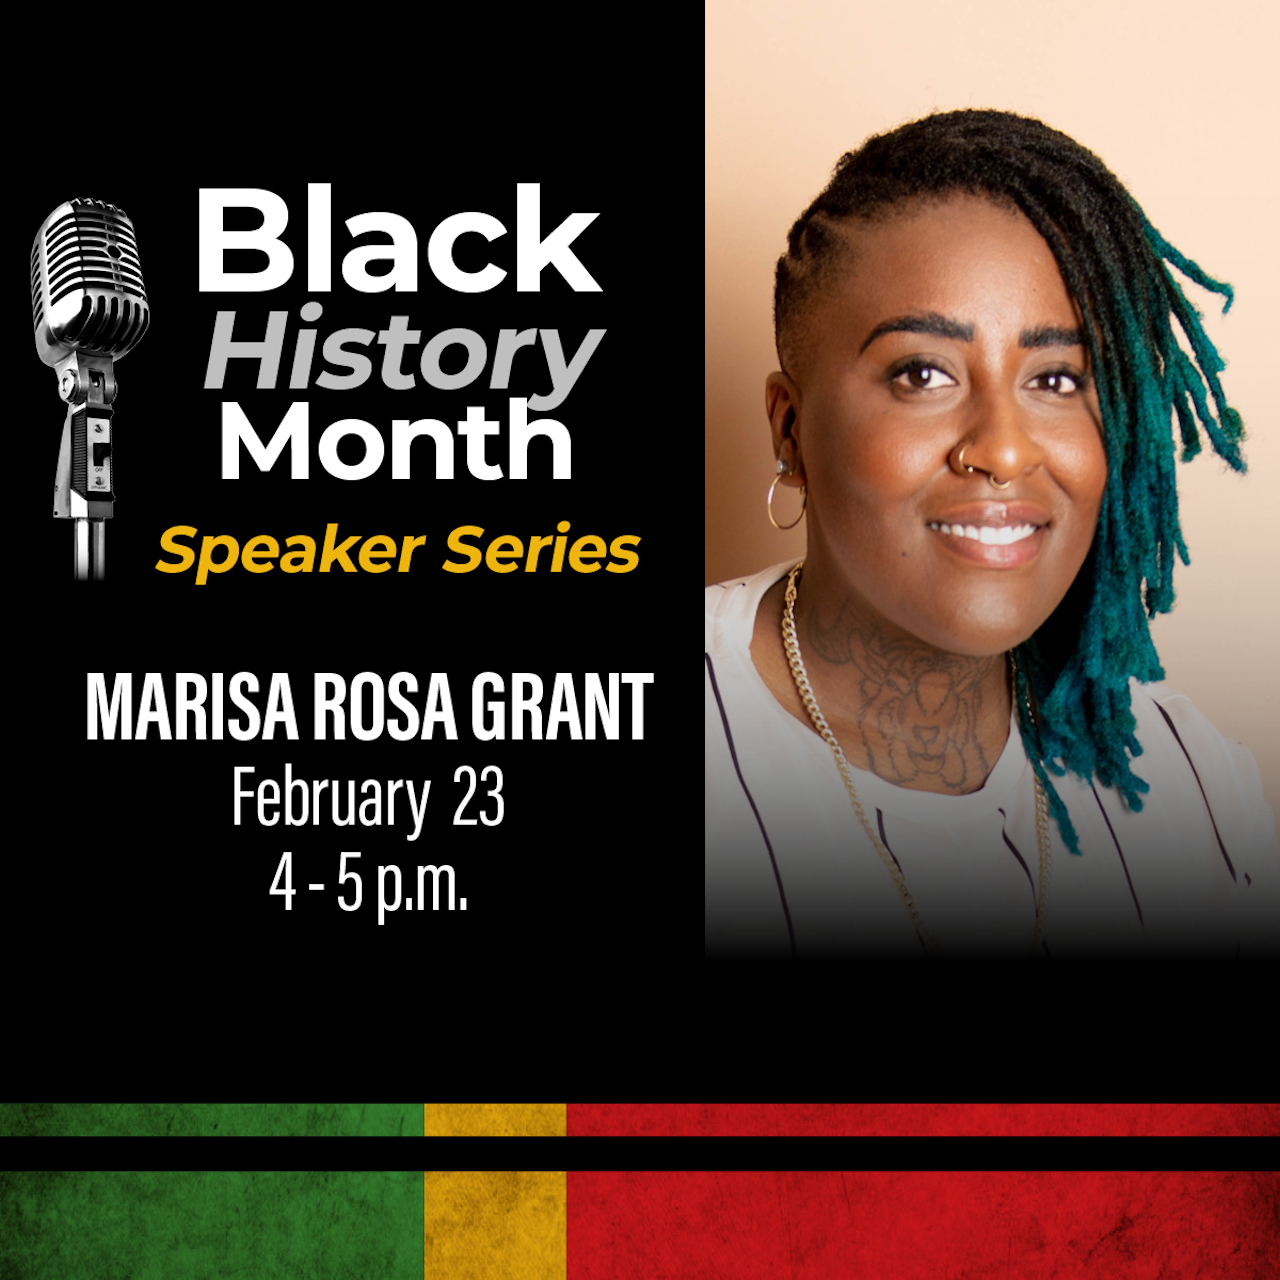 Poster of Black History Month Speaker Series featuring headshot of Marisa Rosa Grant